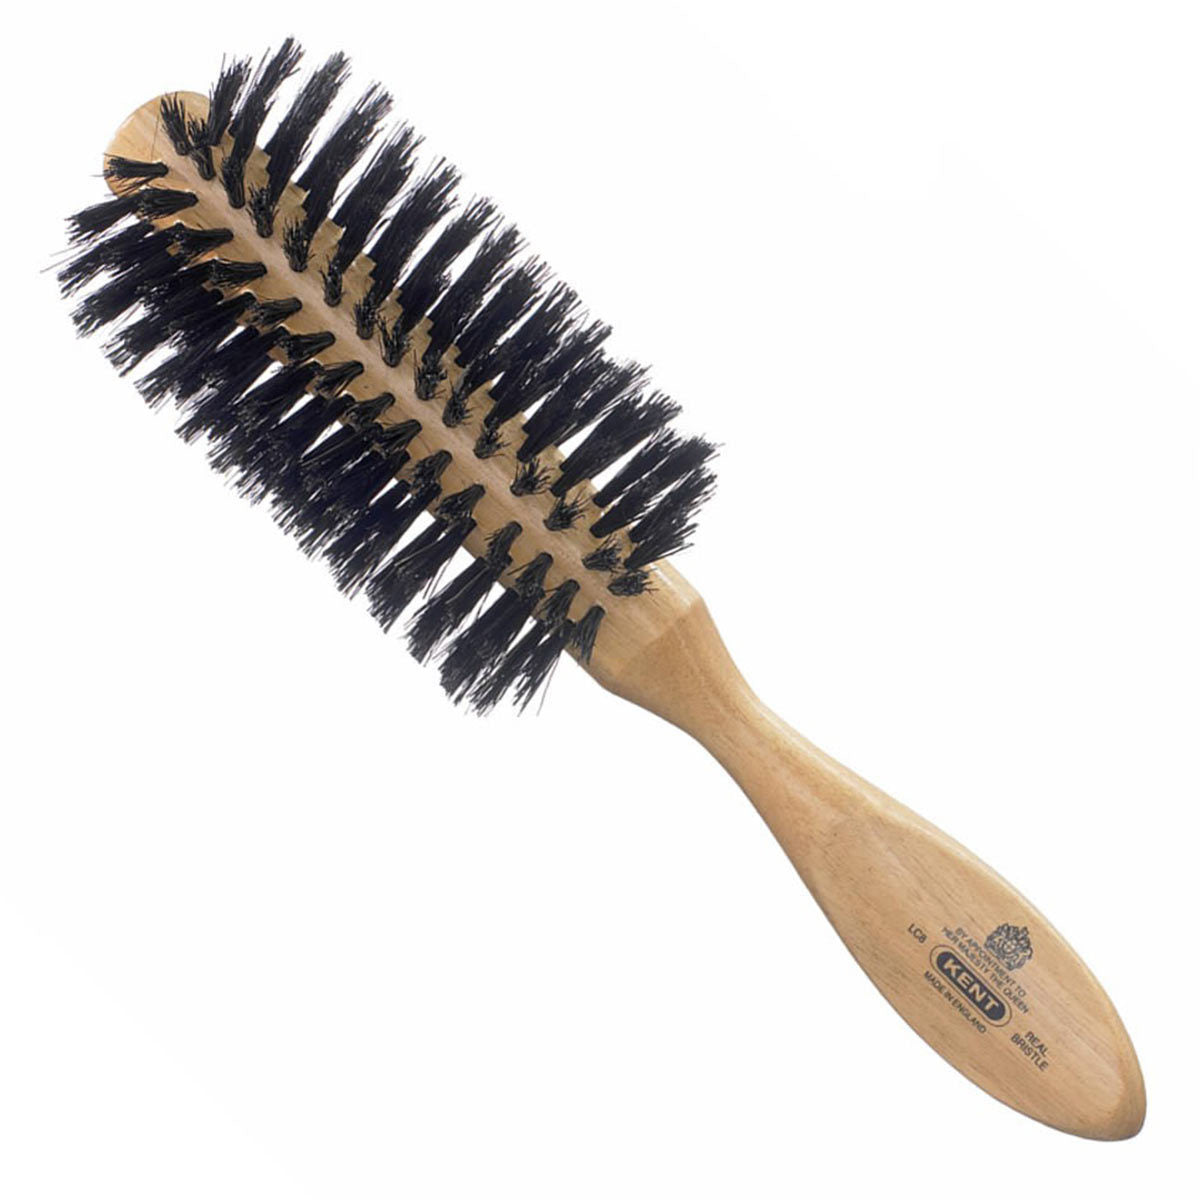 Primary image of Women's Half-round Bristle Brush - LC8